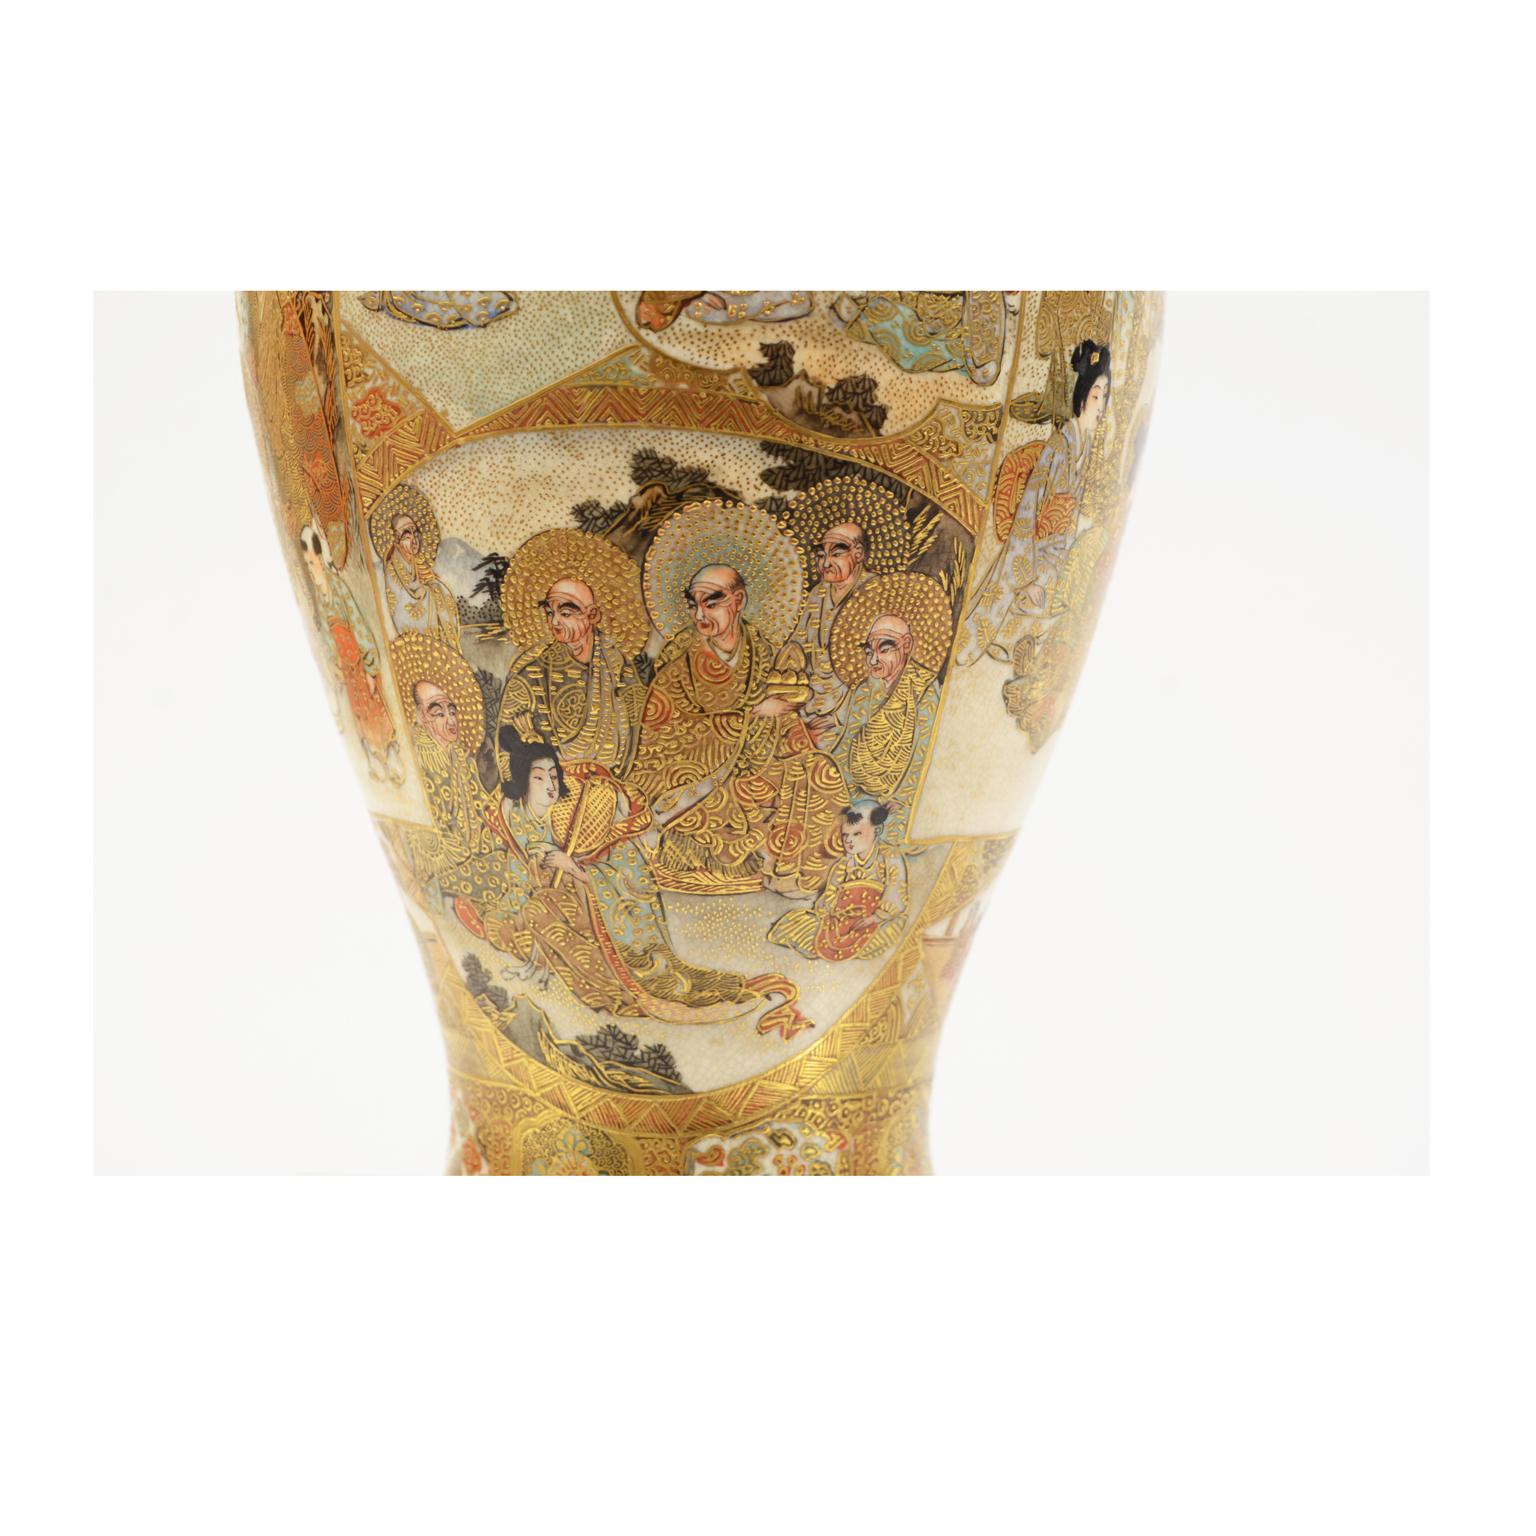 Pair of Japanese Ceramic Satsuma Vases with geishas and monks, 1875 circa 7